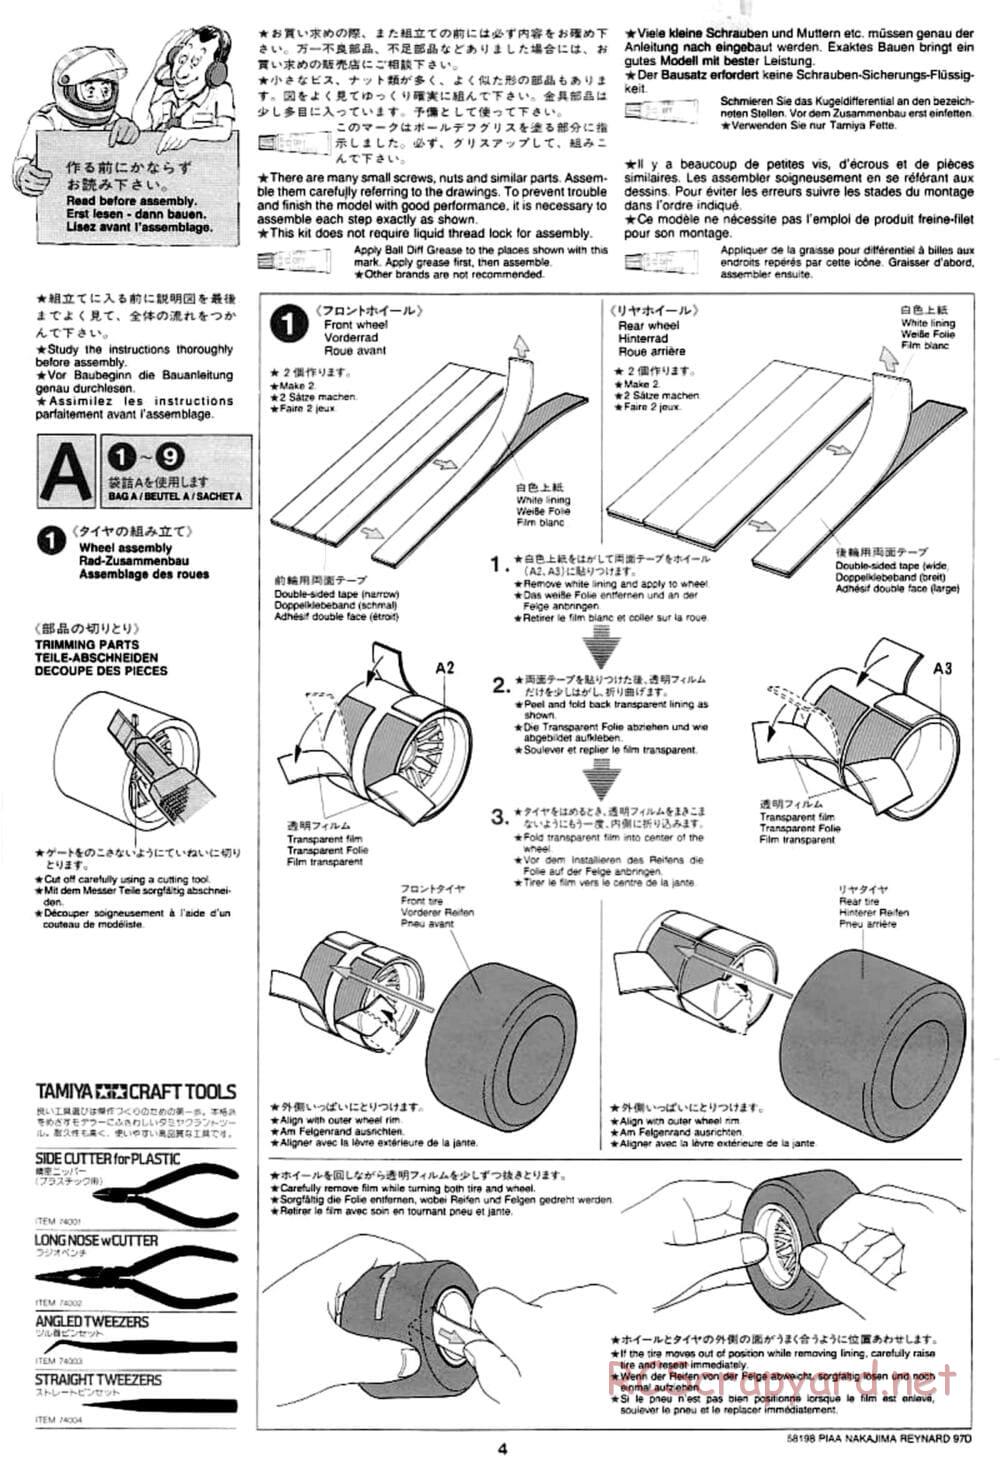 Tamiya - PIAA Nakajima Reynard 97D - F103 Chassis - Manual - Page 4